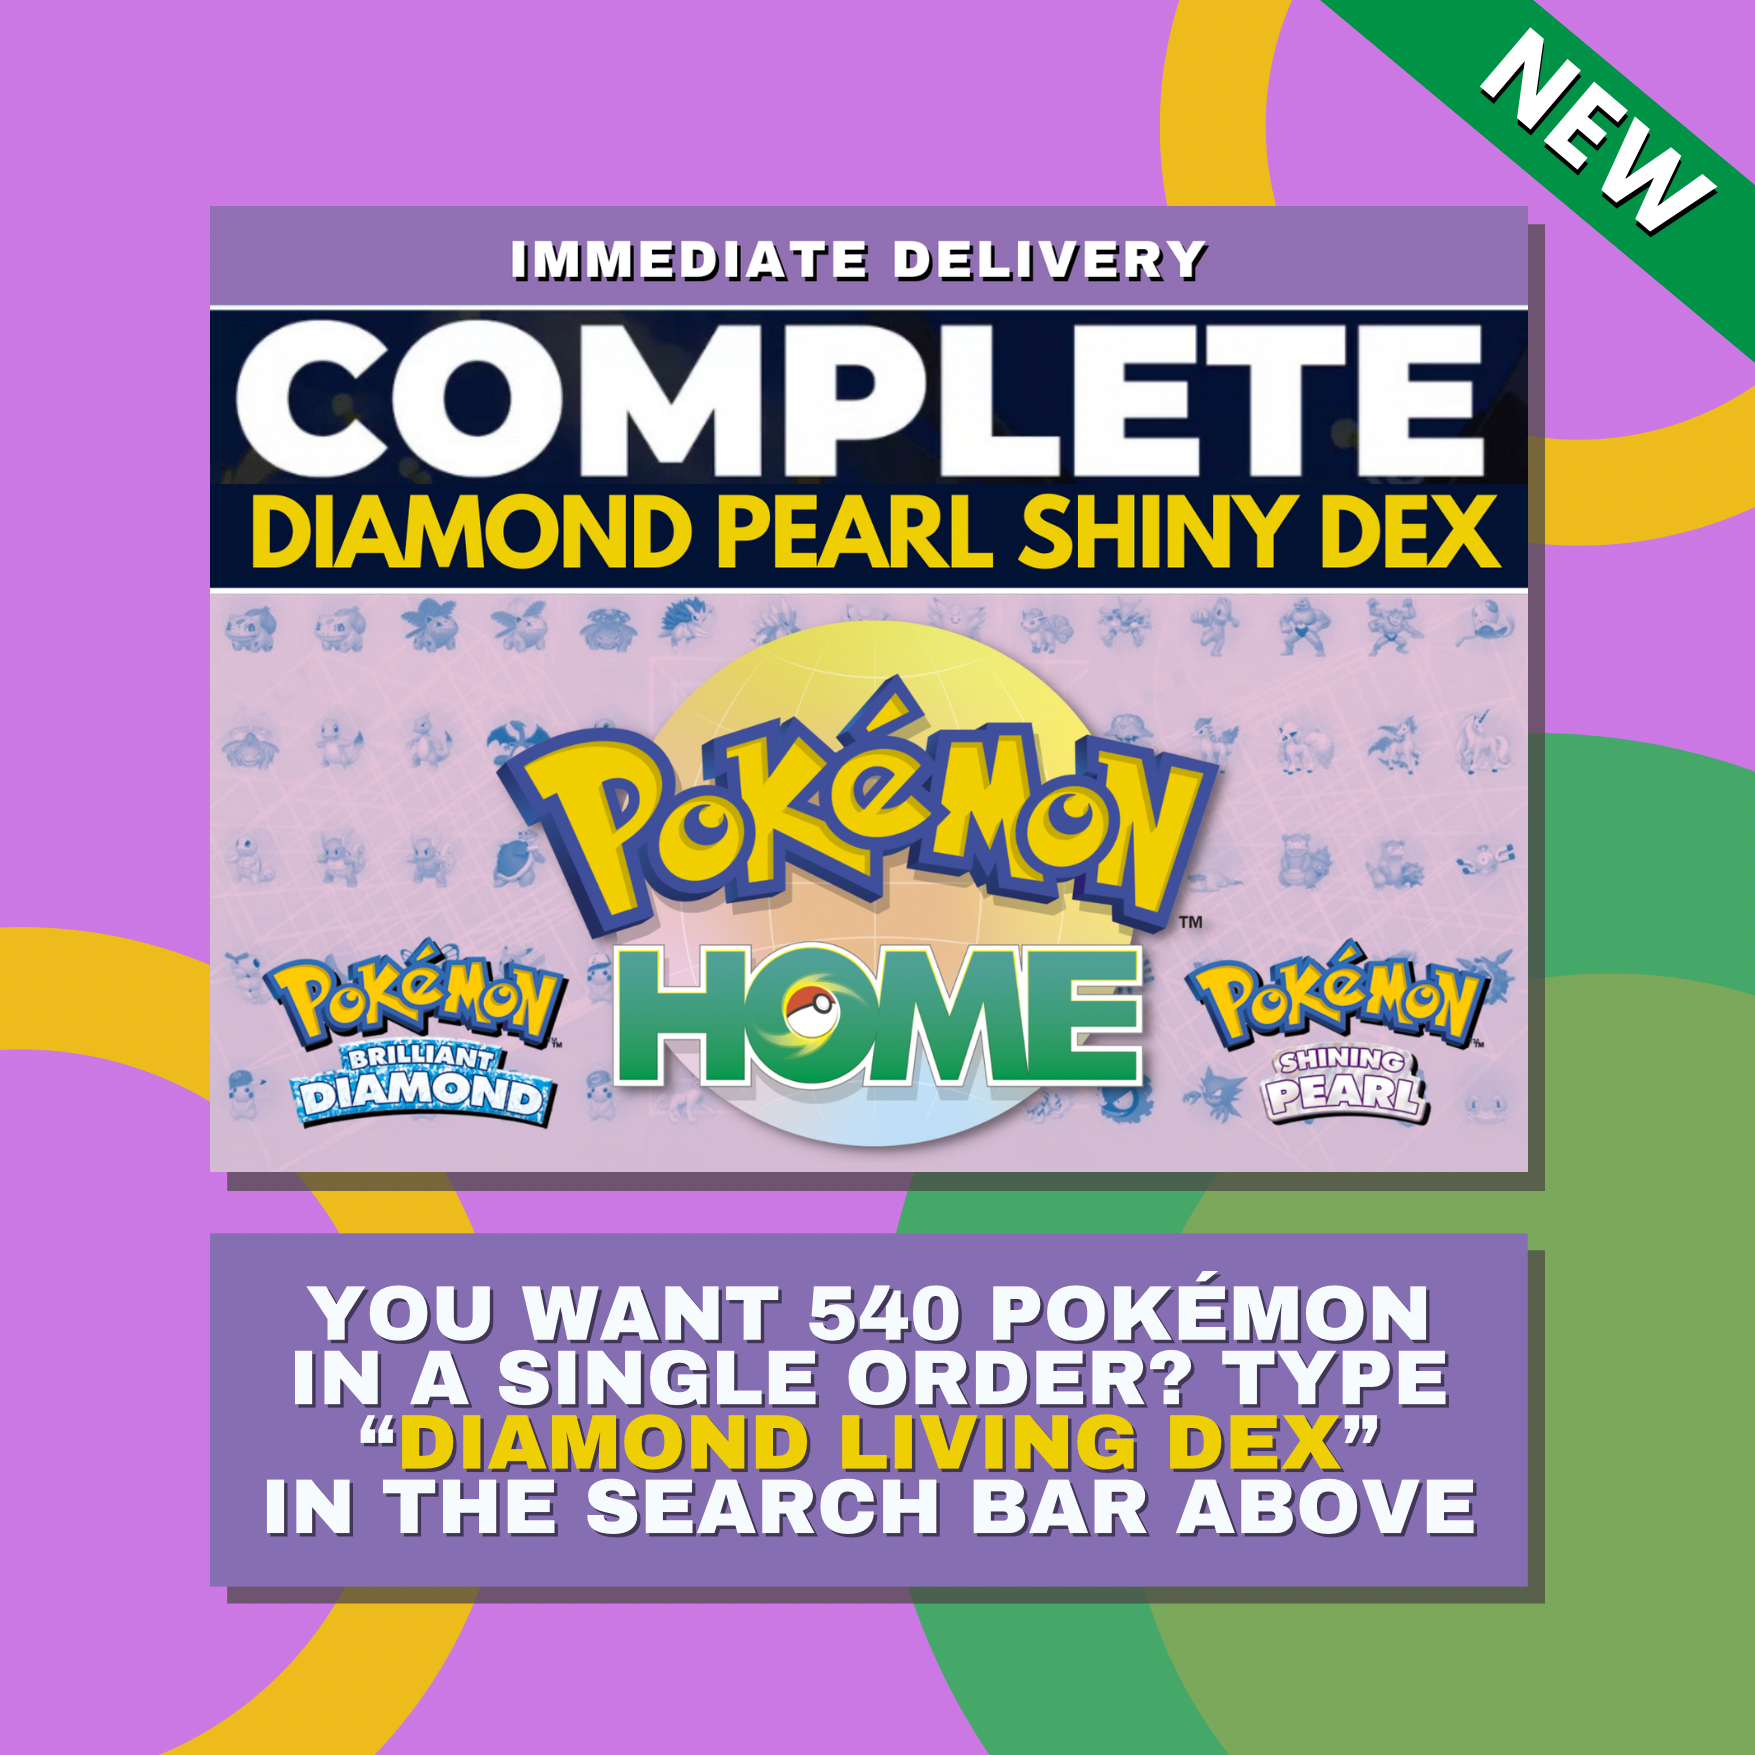 Slowking Shiny ✨ or Non Shiny Pokémon Brilliant Diamond Shining Pearl Battle Ready 6 IV Competitive 100% Legit Level 100 Customizable Custom OT by Shiny Living Dex | Shiny Living Dex